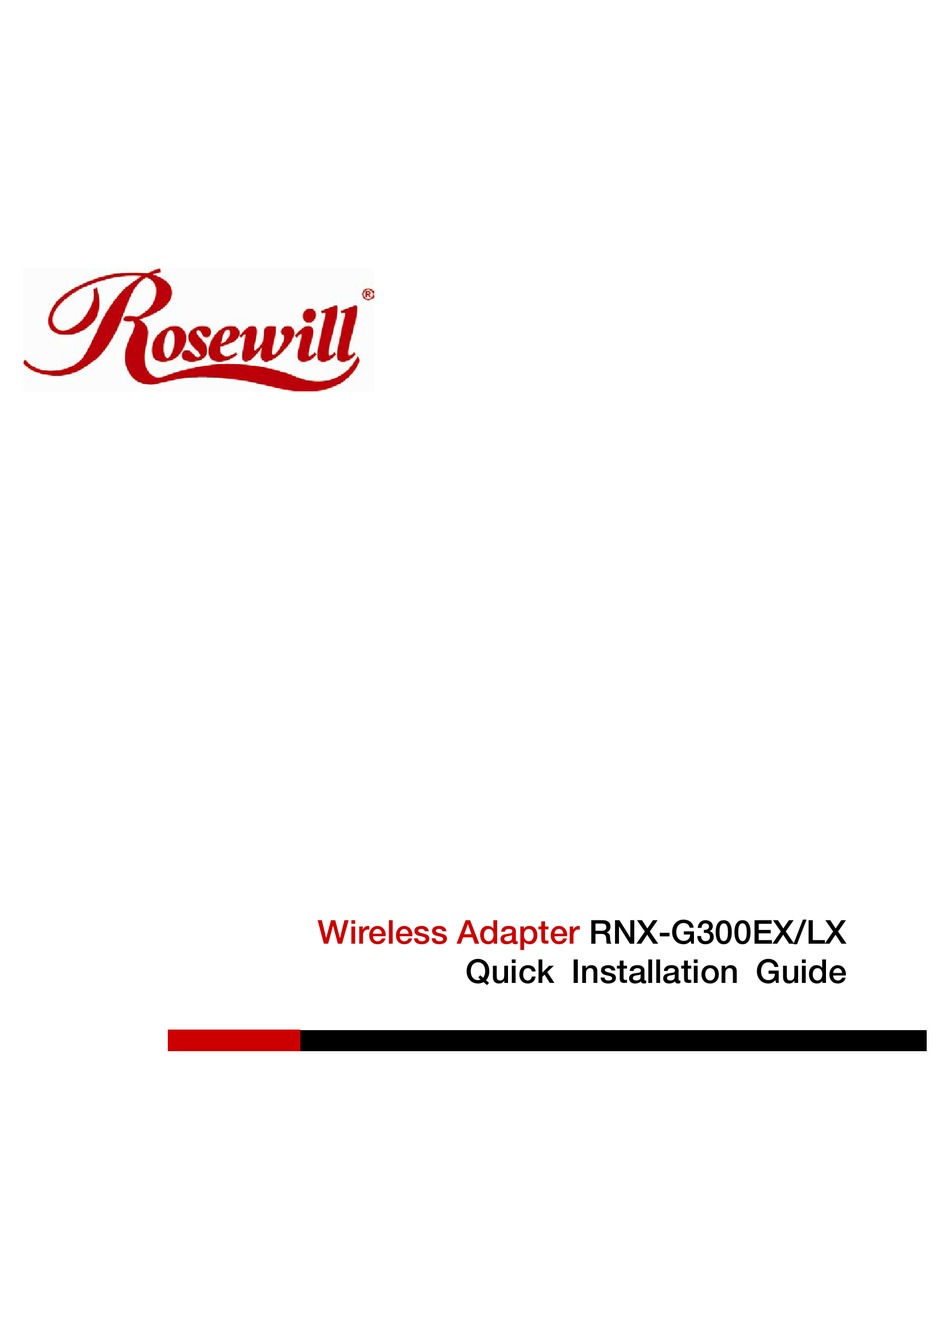 rosewill wireless adapter drivers windows 10